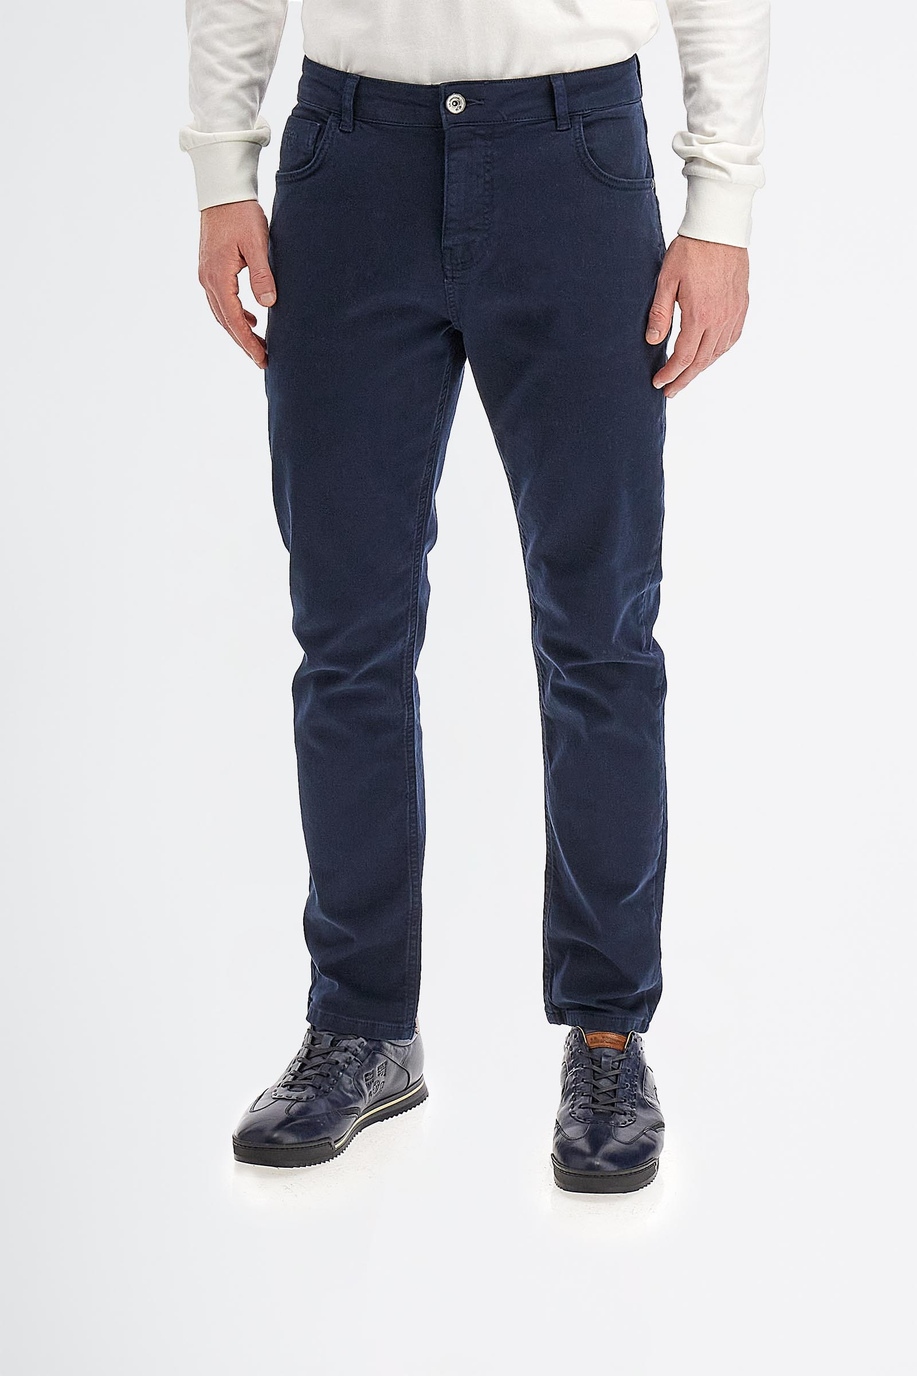 Men’s trousers in stretch cotton regular fit chino model - Men | La Martina - Official Online Shop